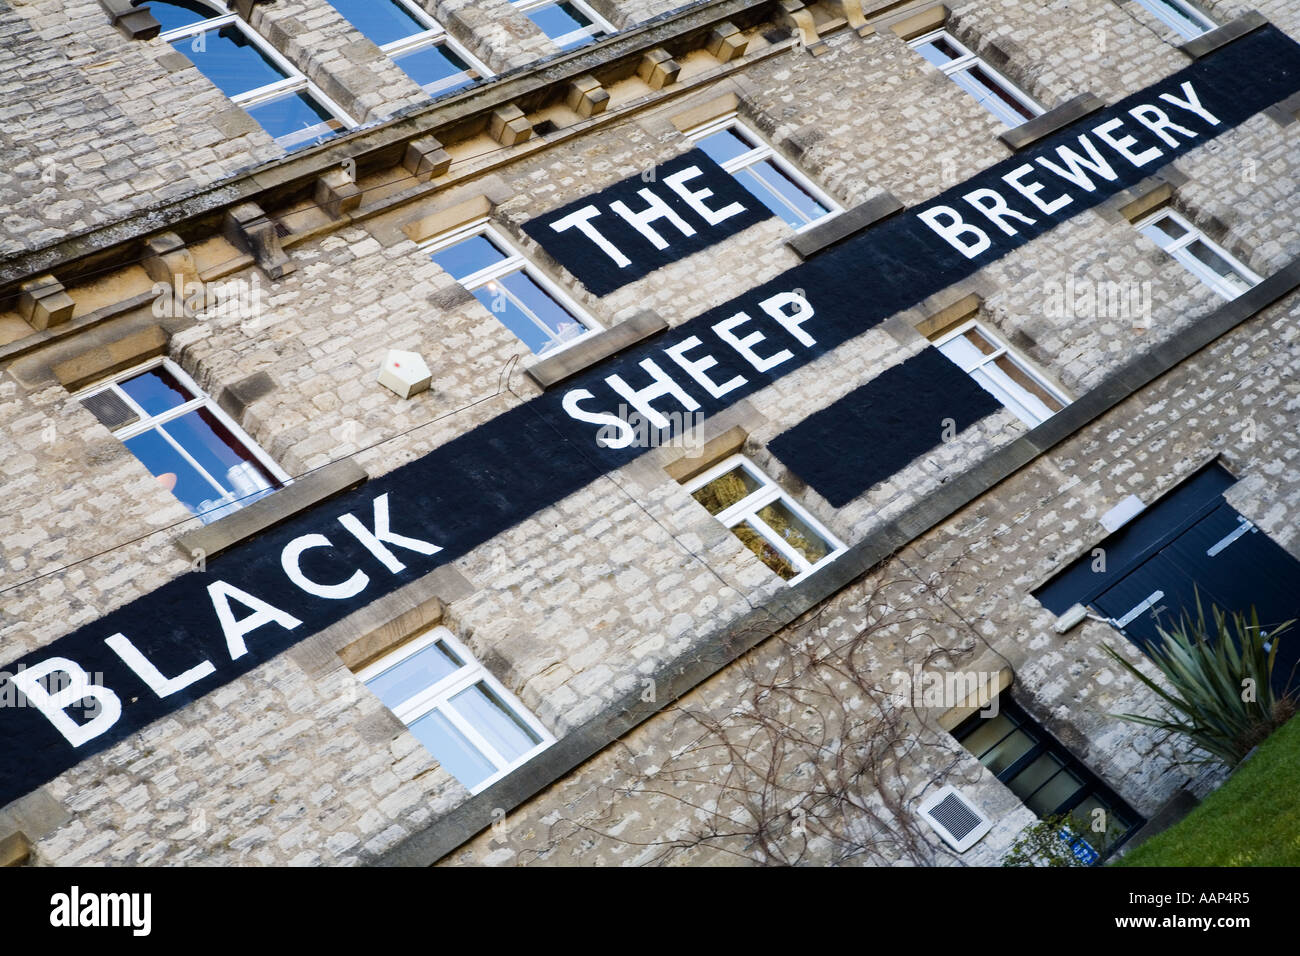 The Black Sheep Brewery in Masham North Yorkshire England Stock Photo